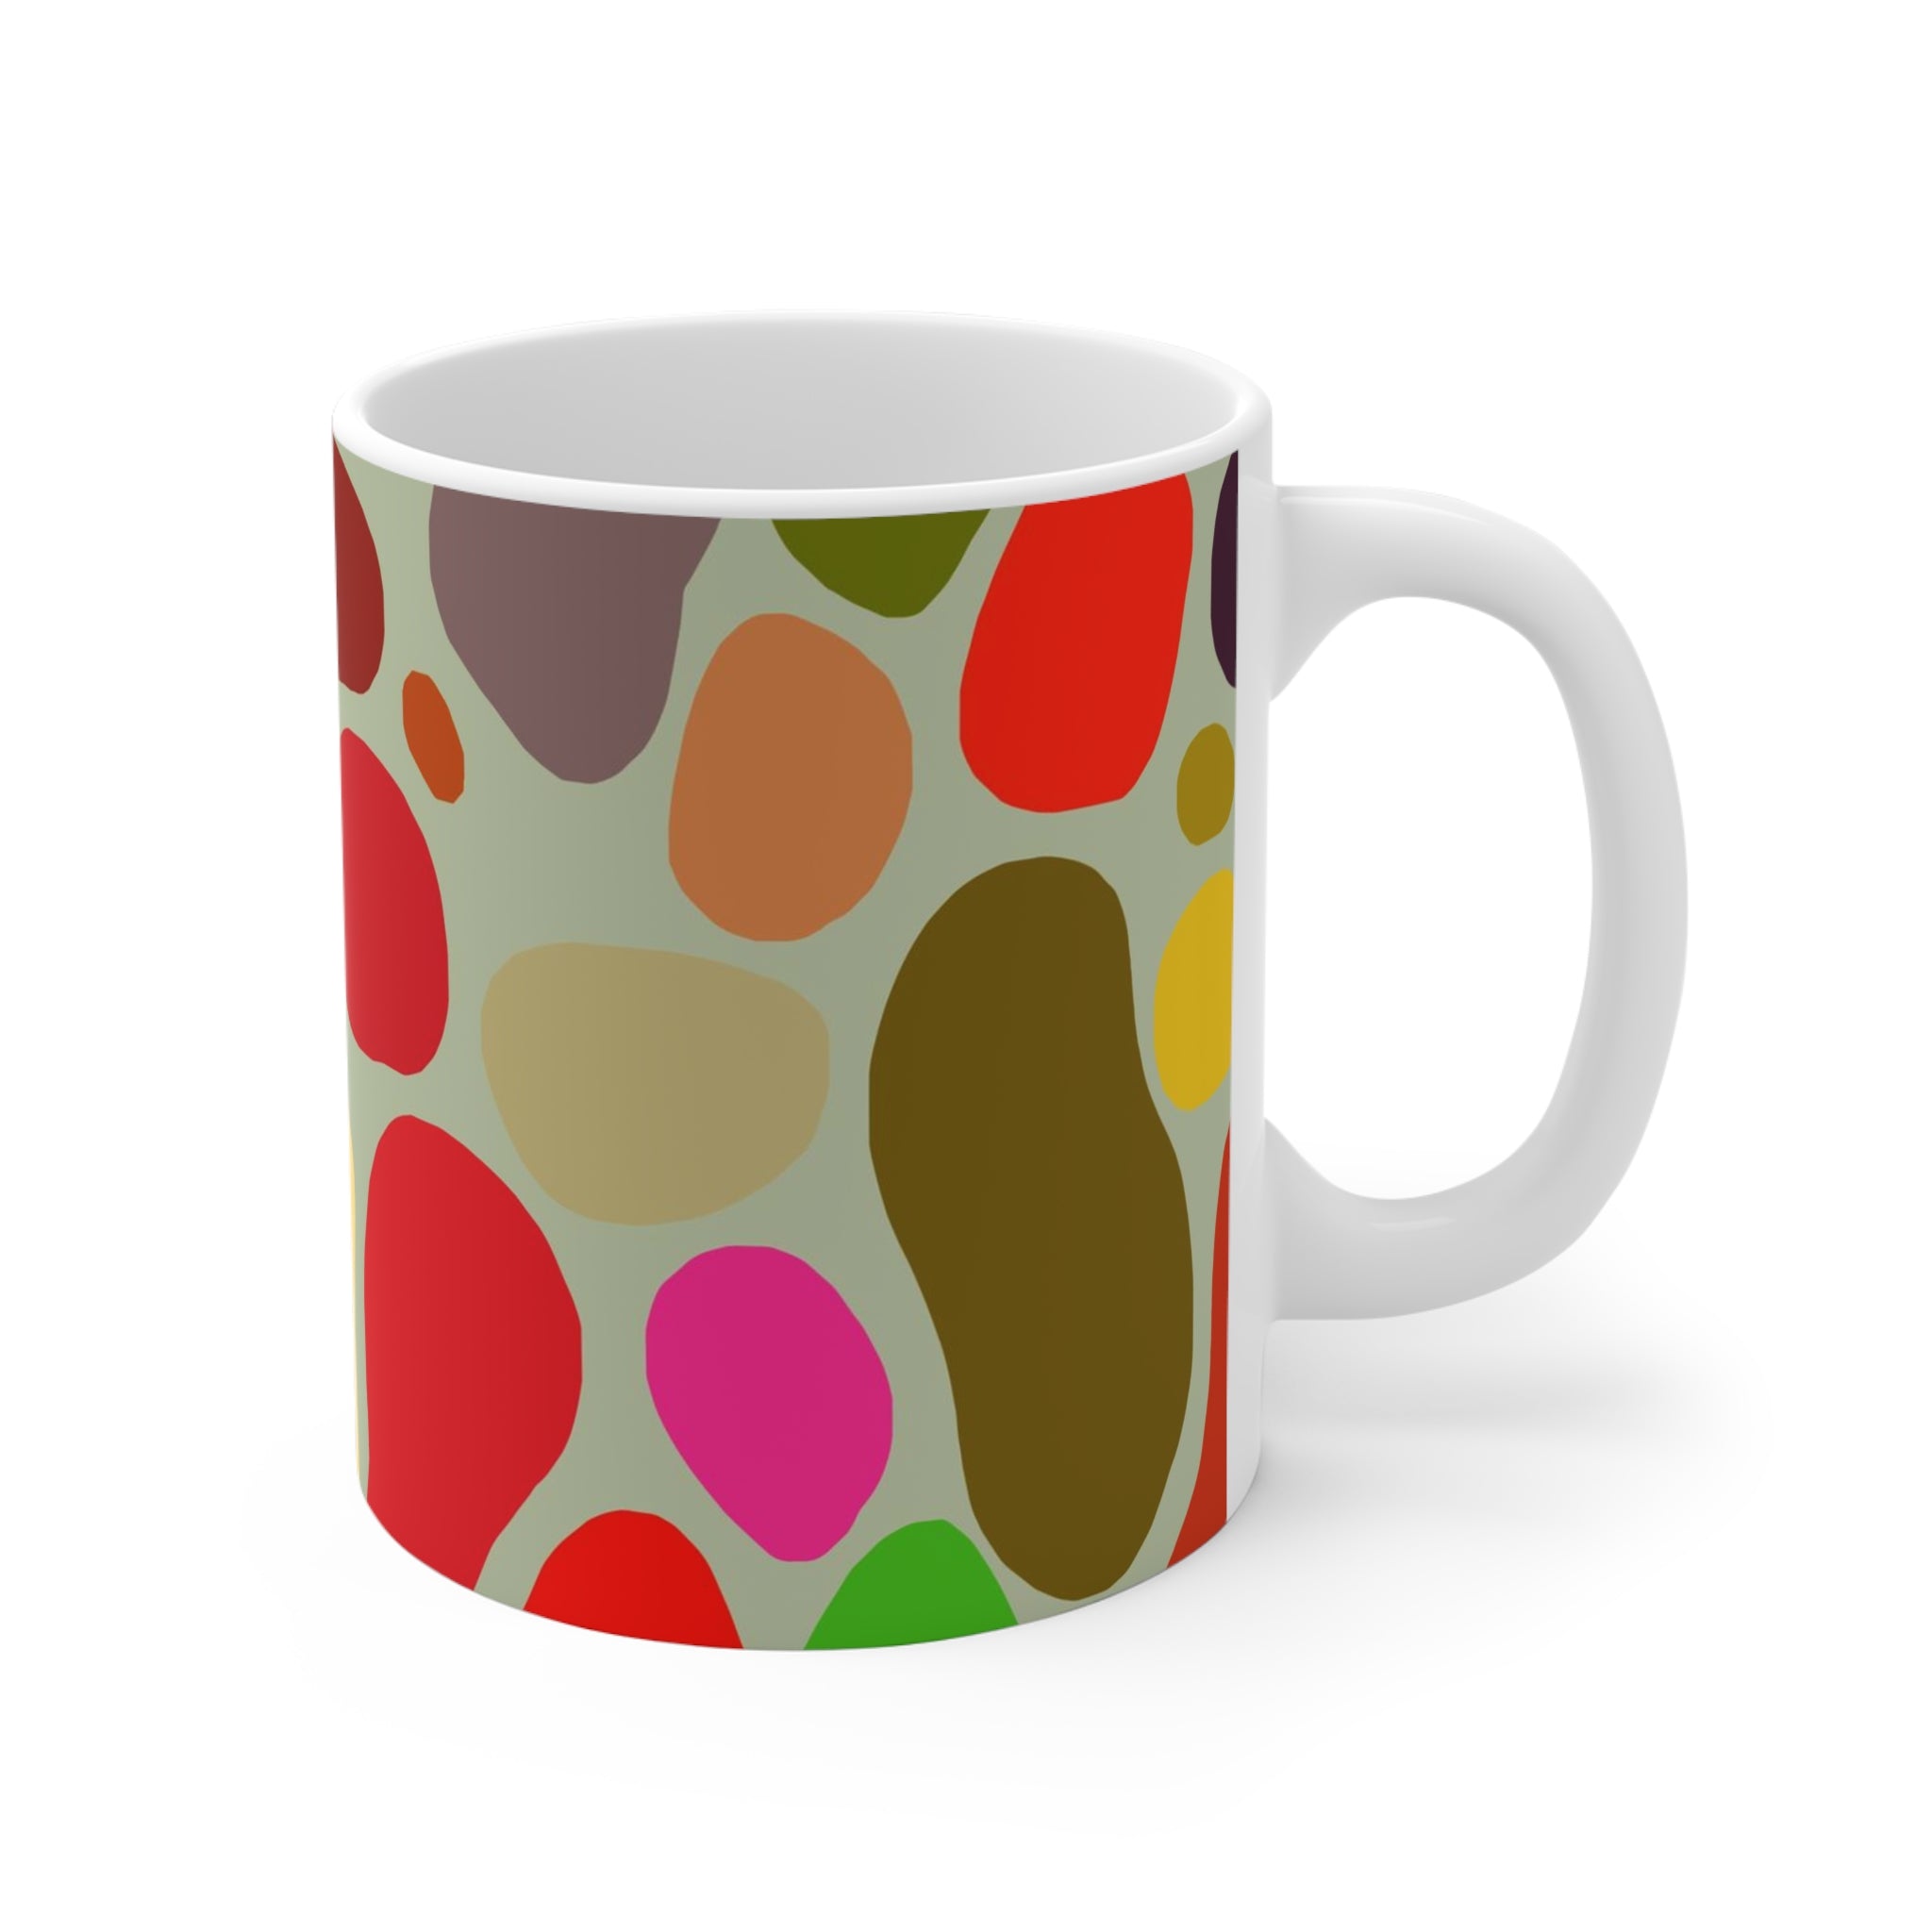 11oz ceramic mug with a multicolored stone design